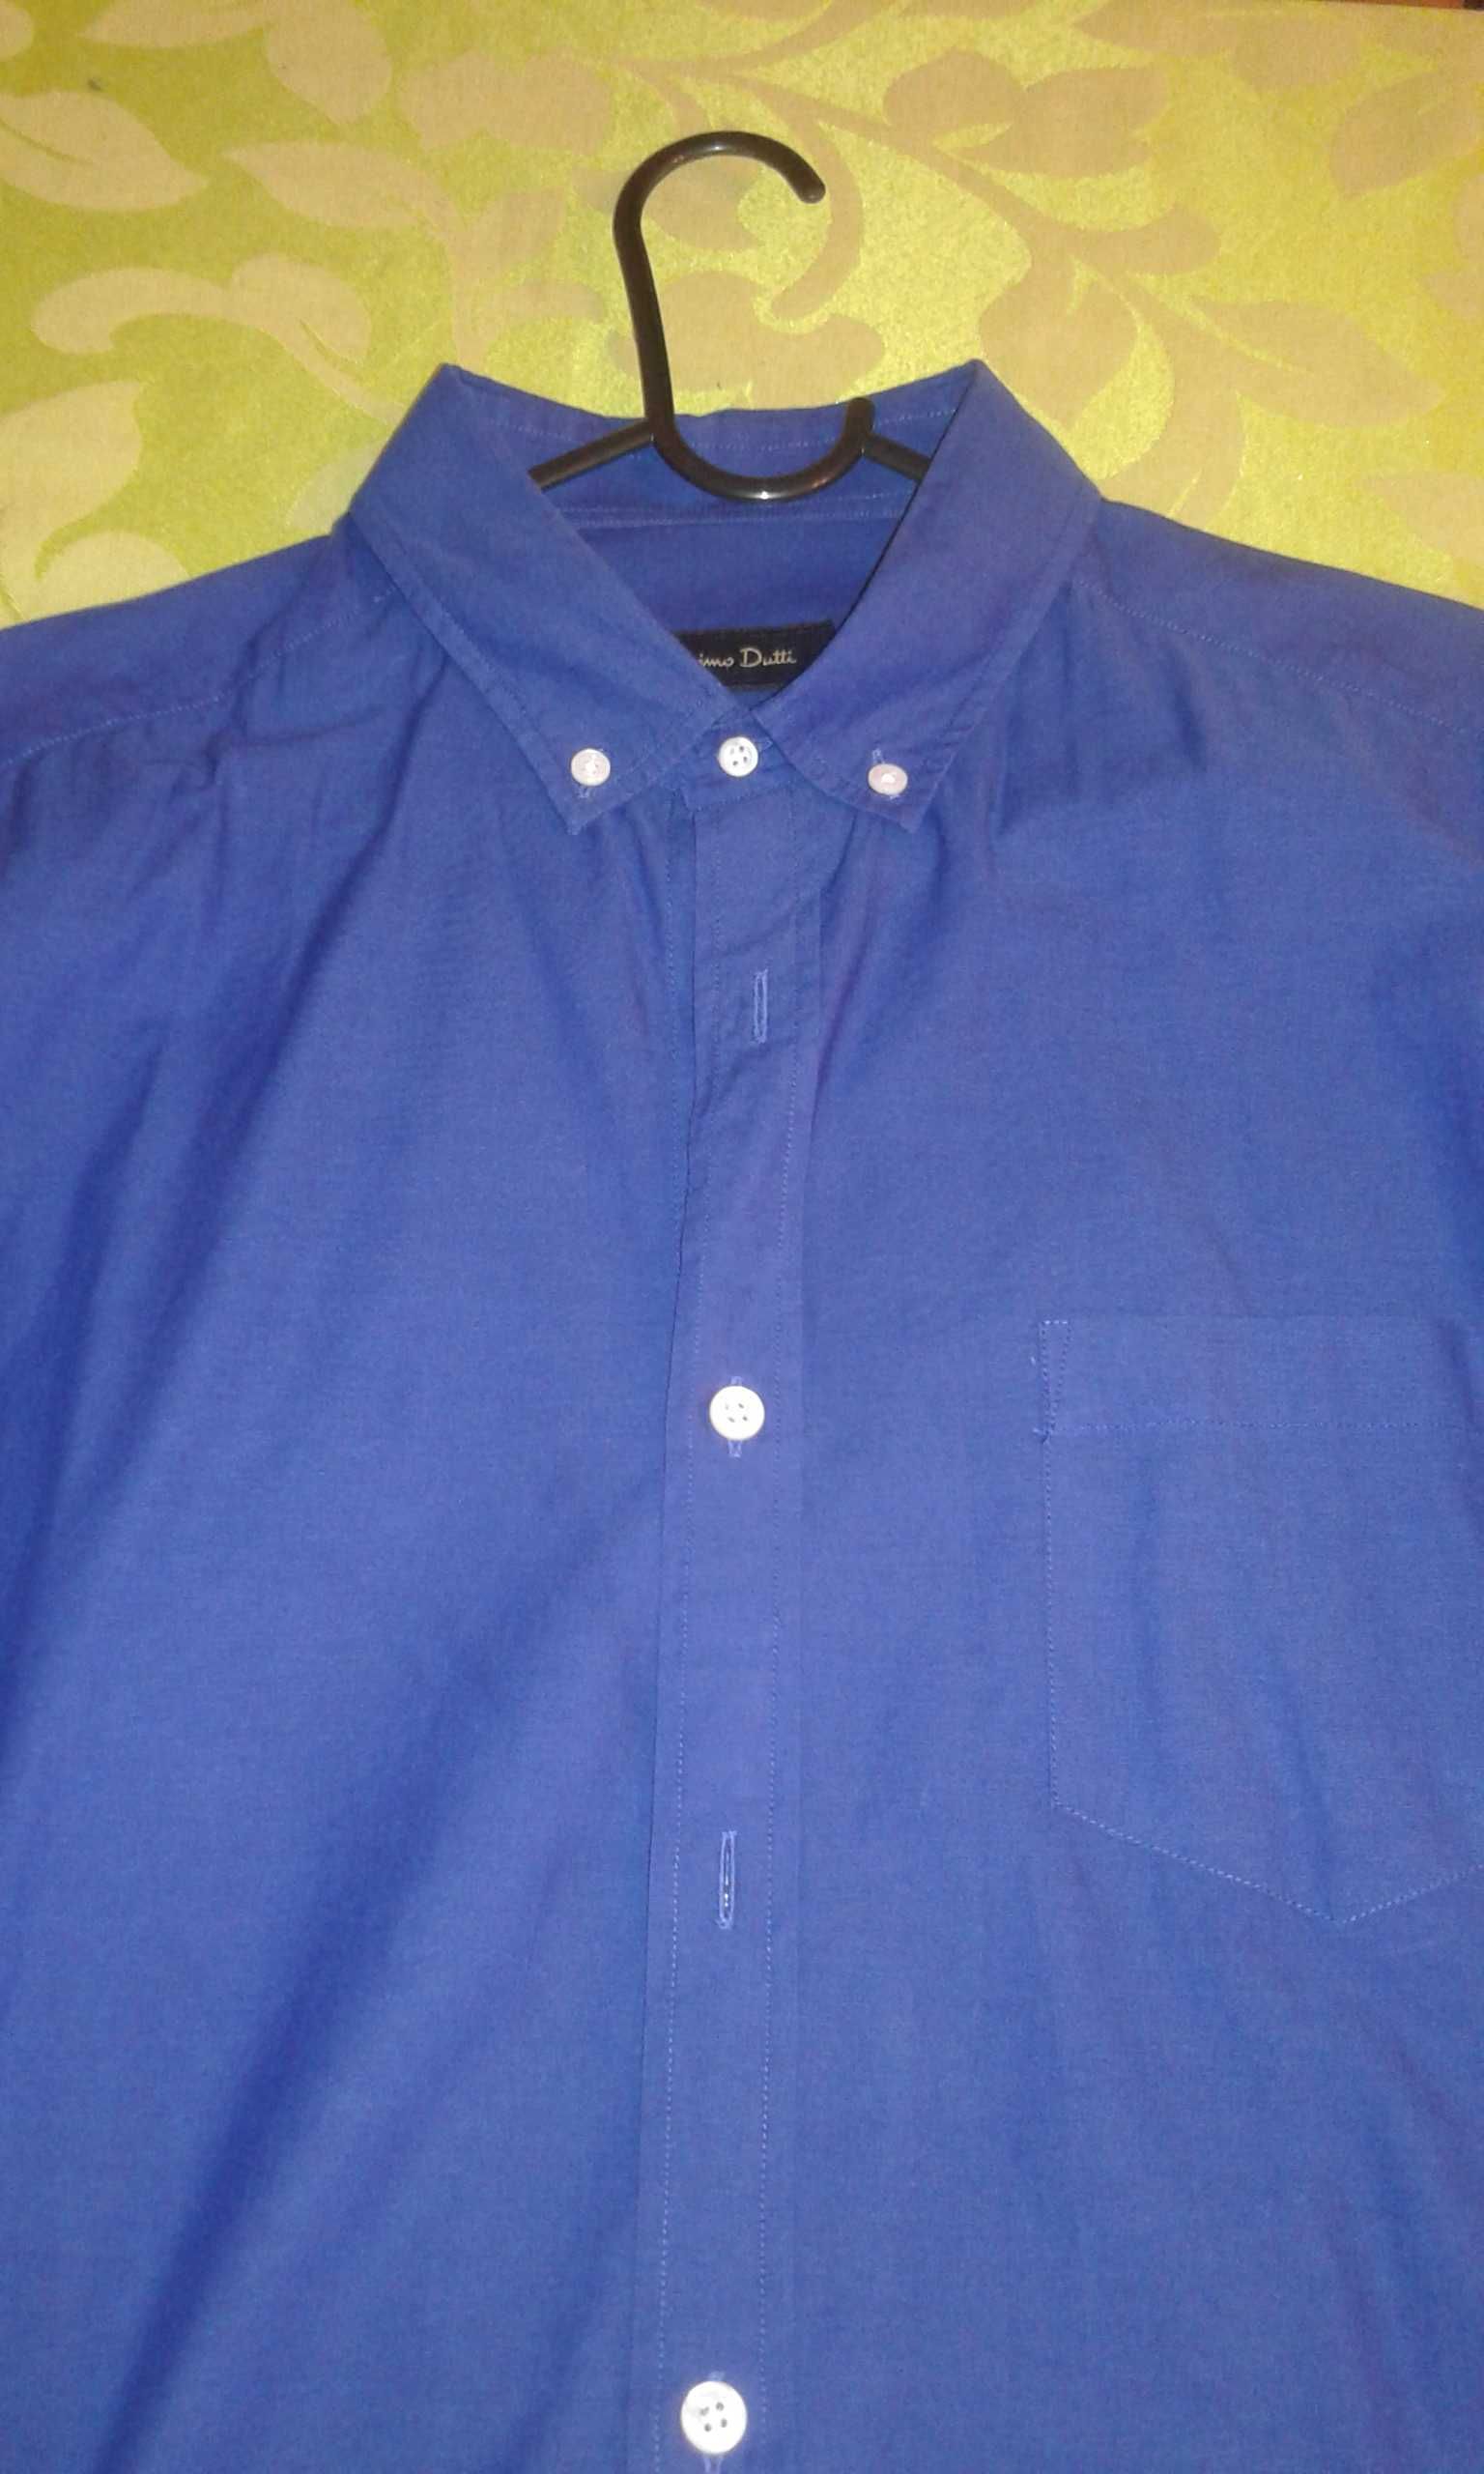 Camisa Massimo Dutti - Azul - corte slim - tam. L - c/ nova